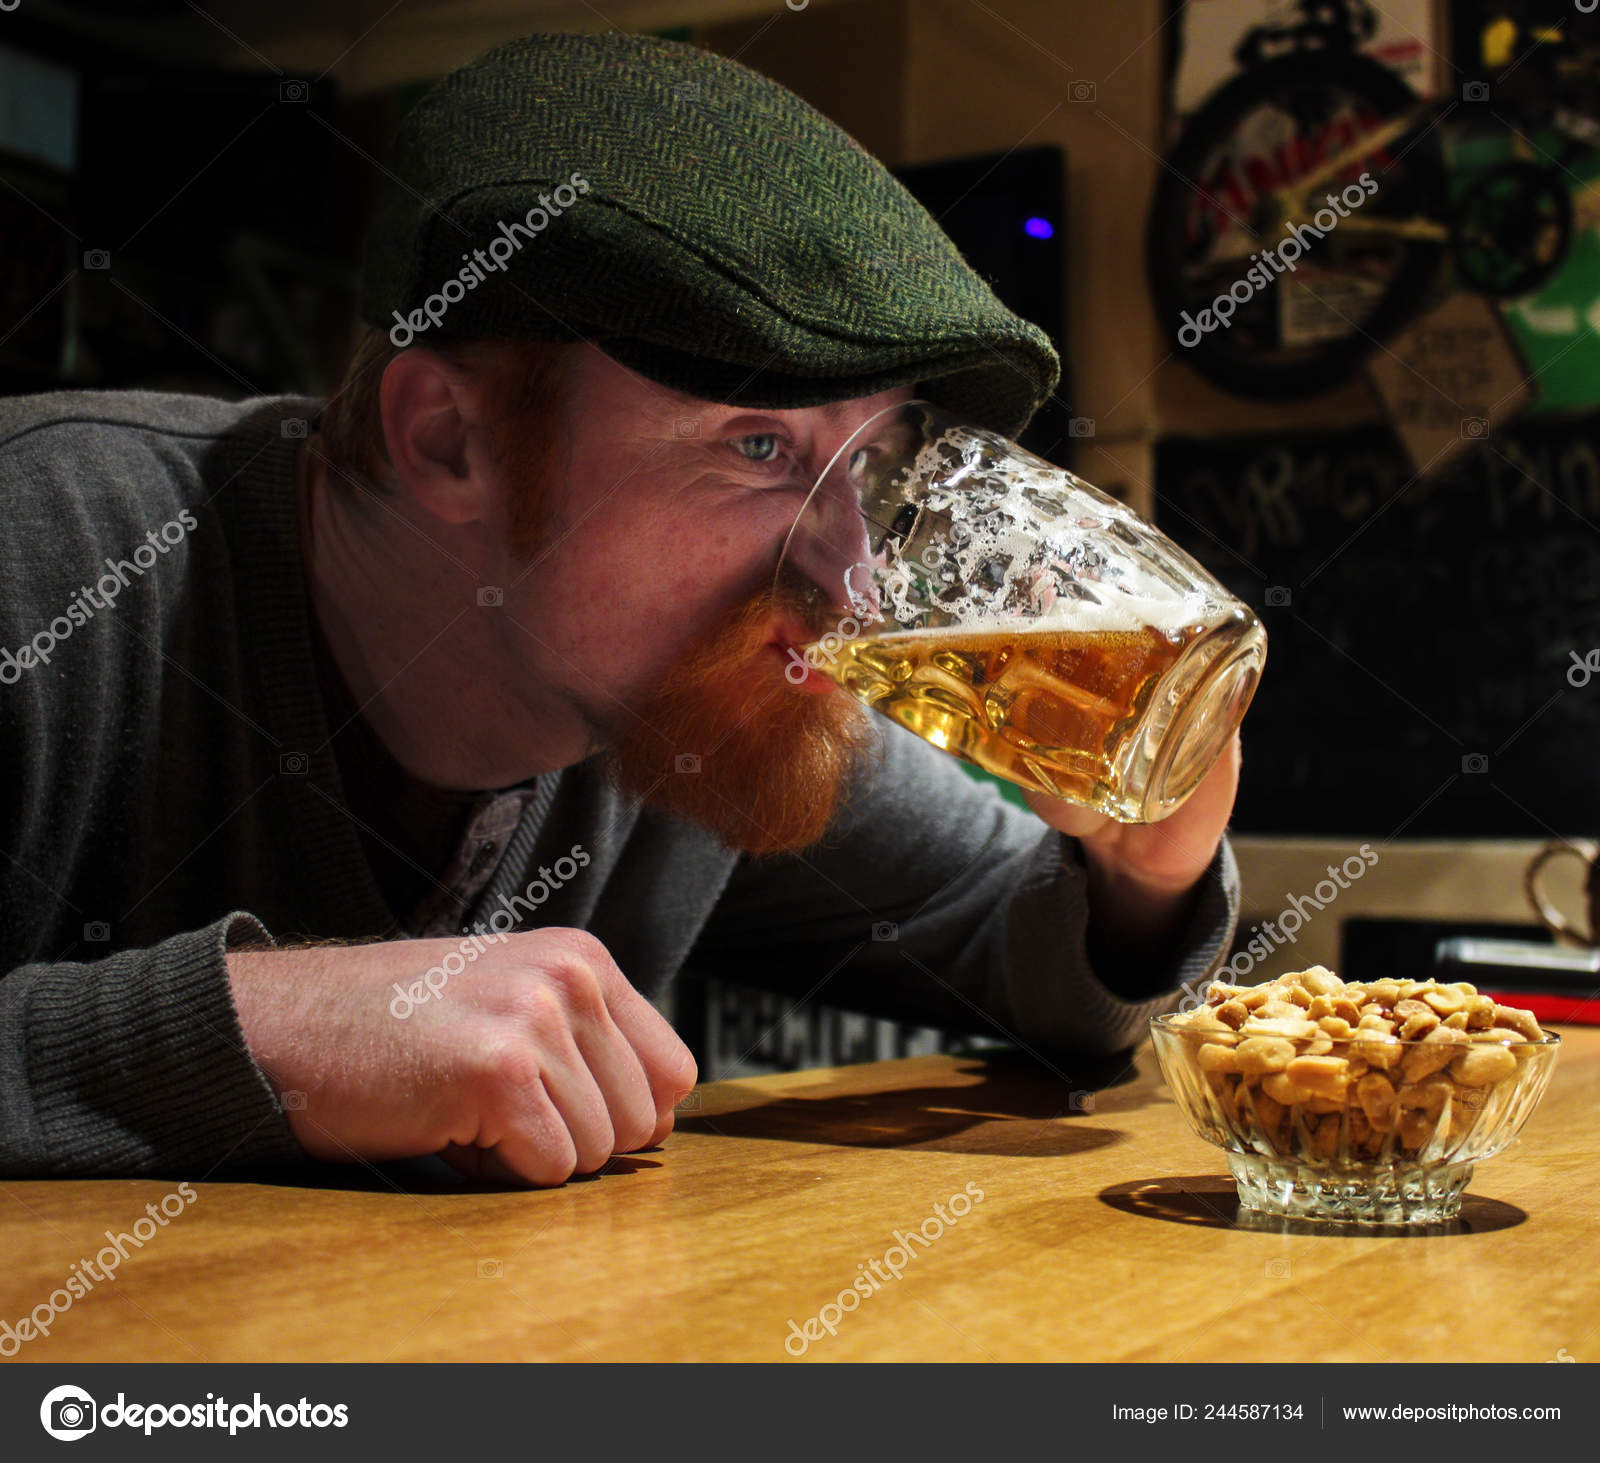 depositphotos_244587134-stock-photo-redbeard-irish-guy-drinks-beer.jpg